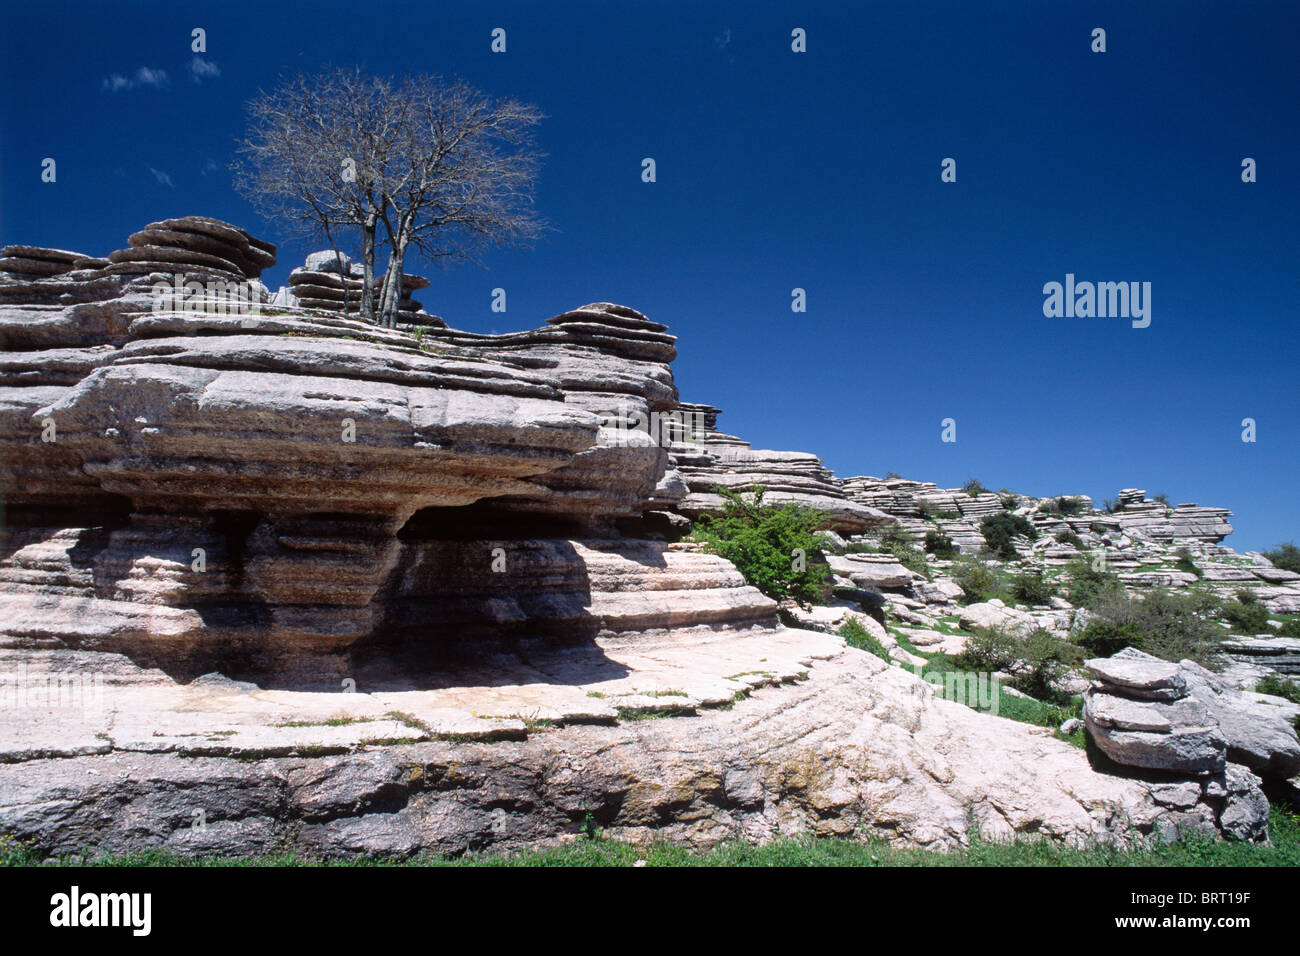 Torcal de Antequera Nature Park, Malaga province, Andalusia, Spain, Europe Stock Photo